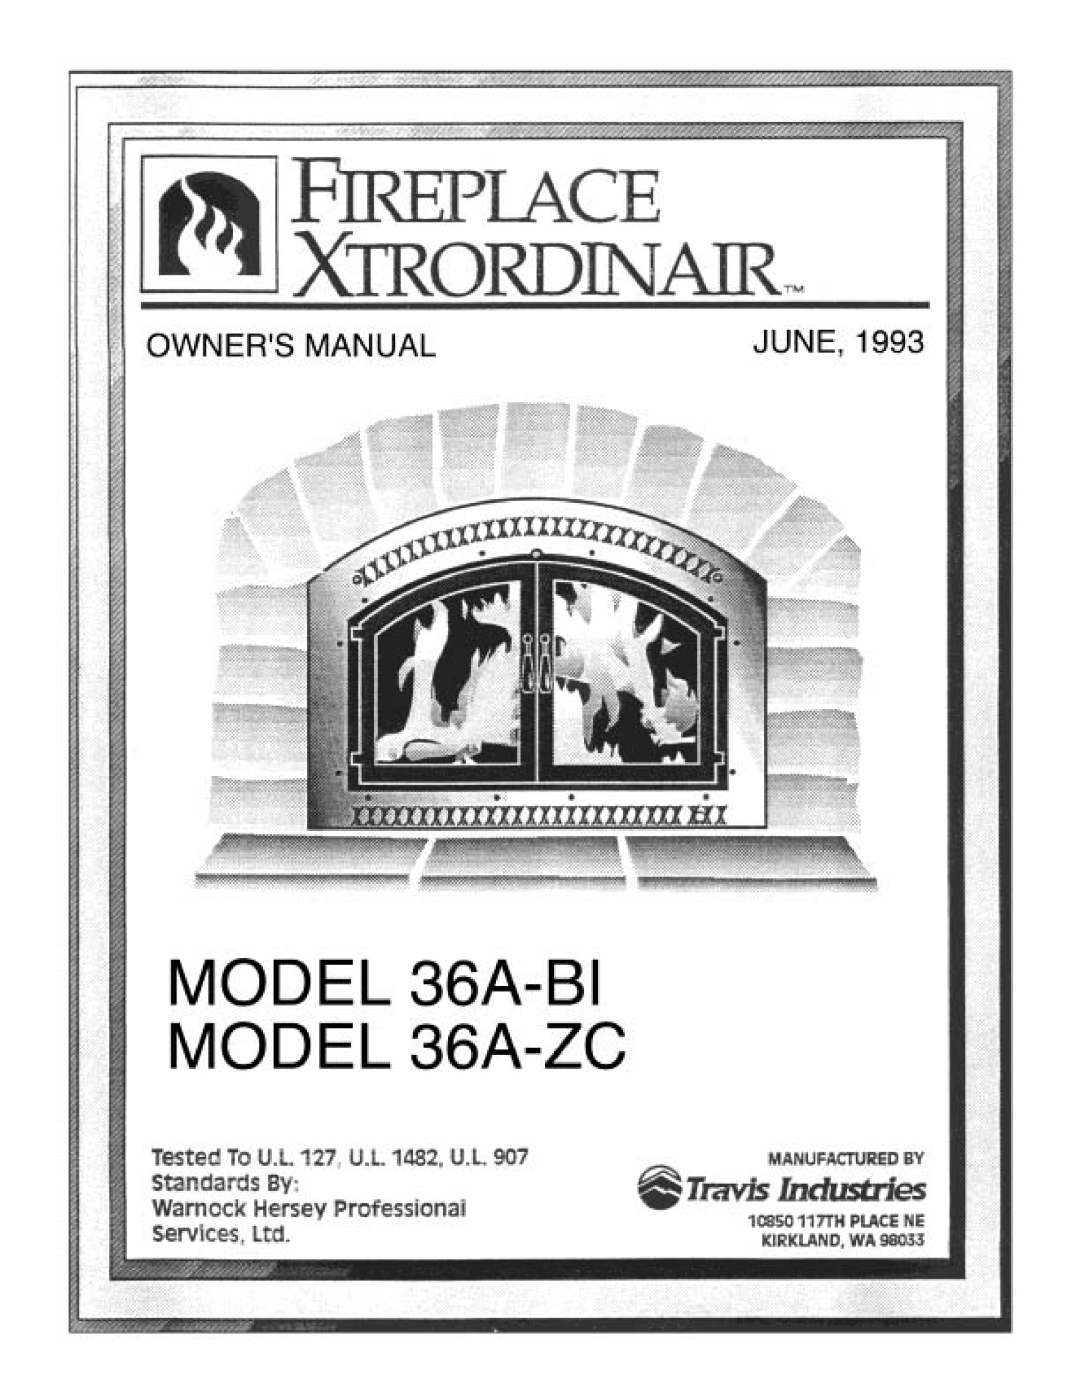 FireplaceXtrordinair 36A-ZC, 36A-BI manual 